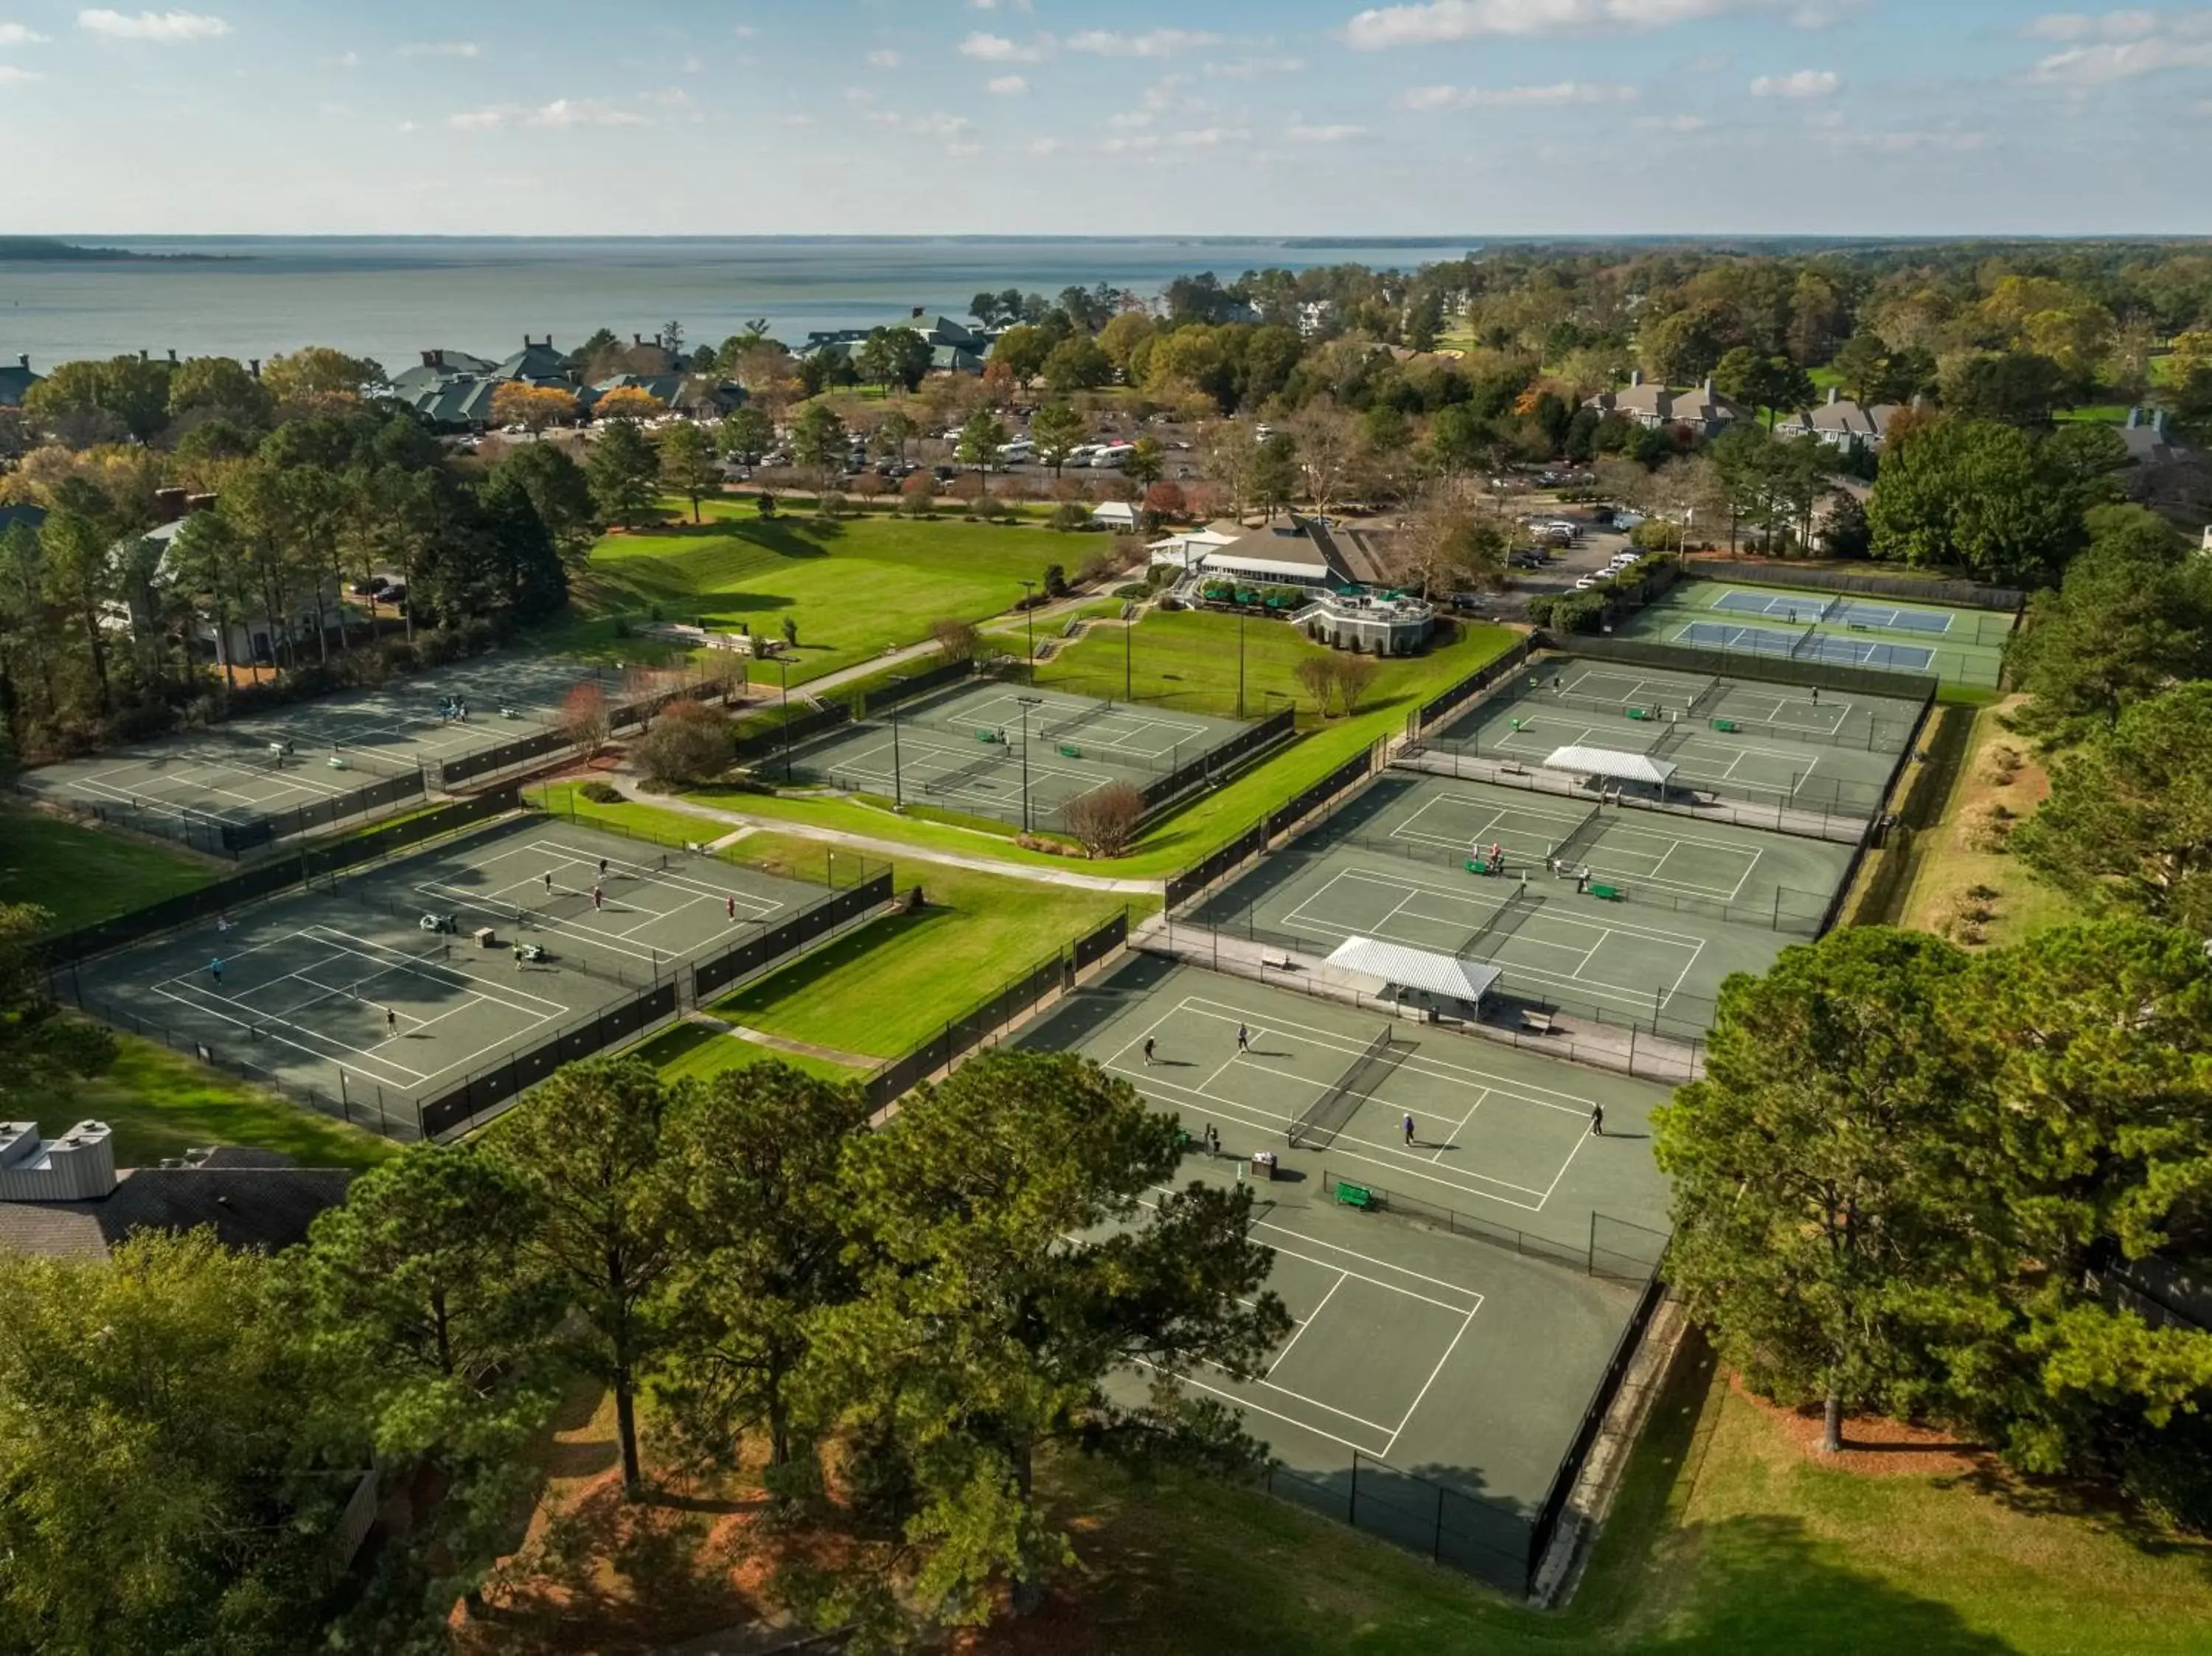 Tennis court, Bird's-eye View in Kingsmill Resort